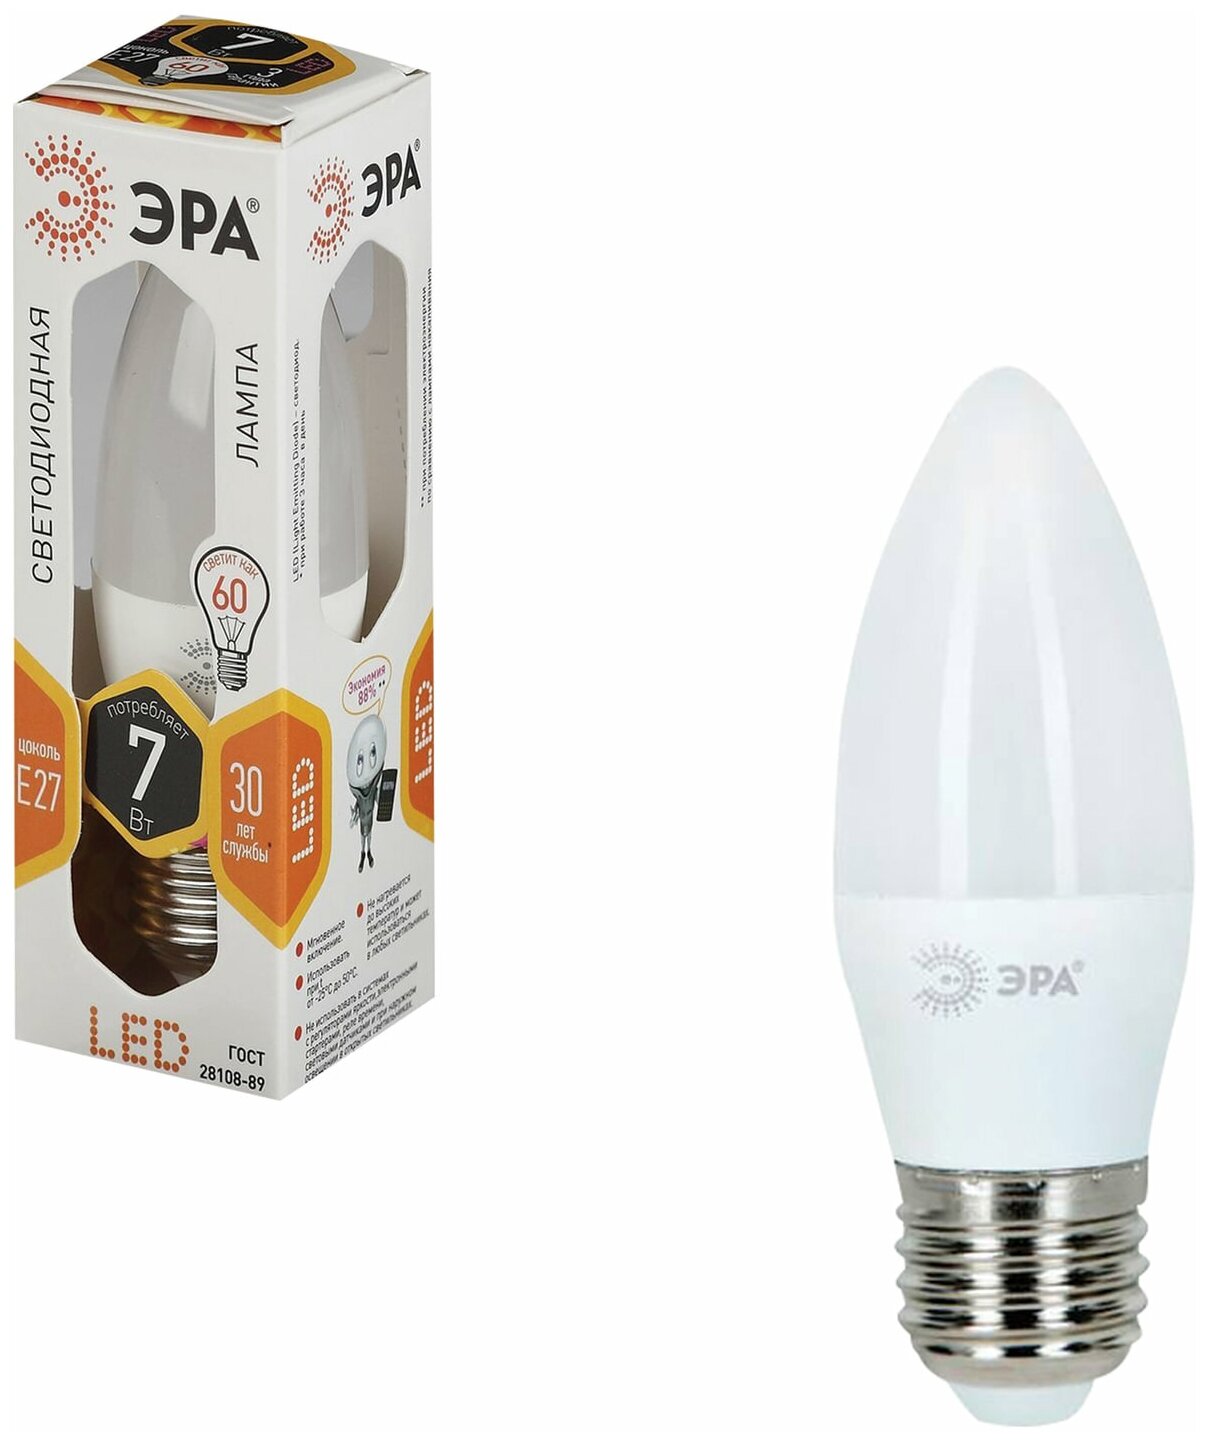 Лампа светодиодная ЭРА, 7 (60) Вт, цоколь E27, "свеча", теплый белый свет, 30000 ч, LED smdB35-7w-827-E27